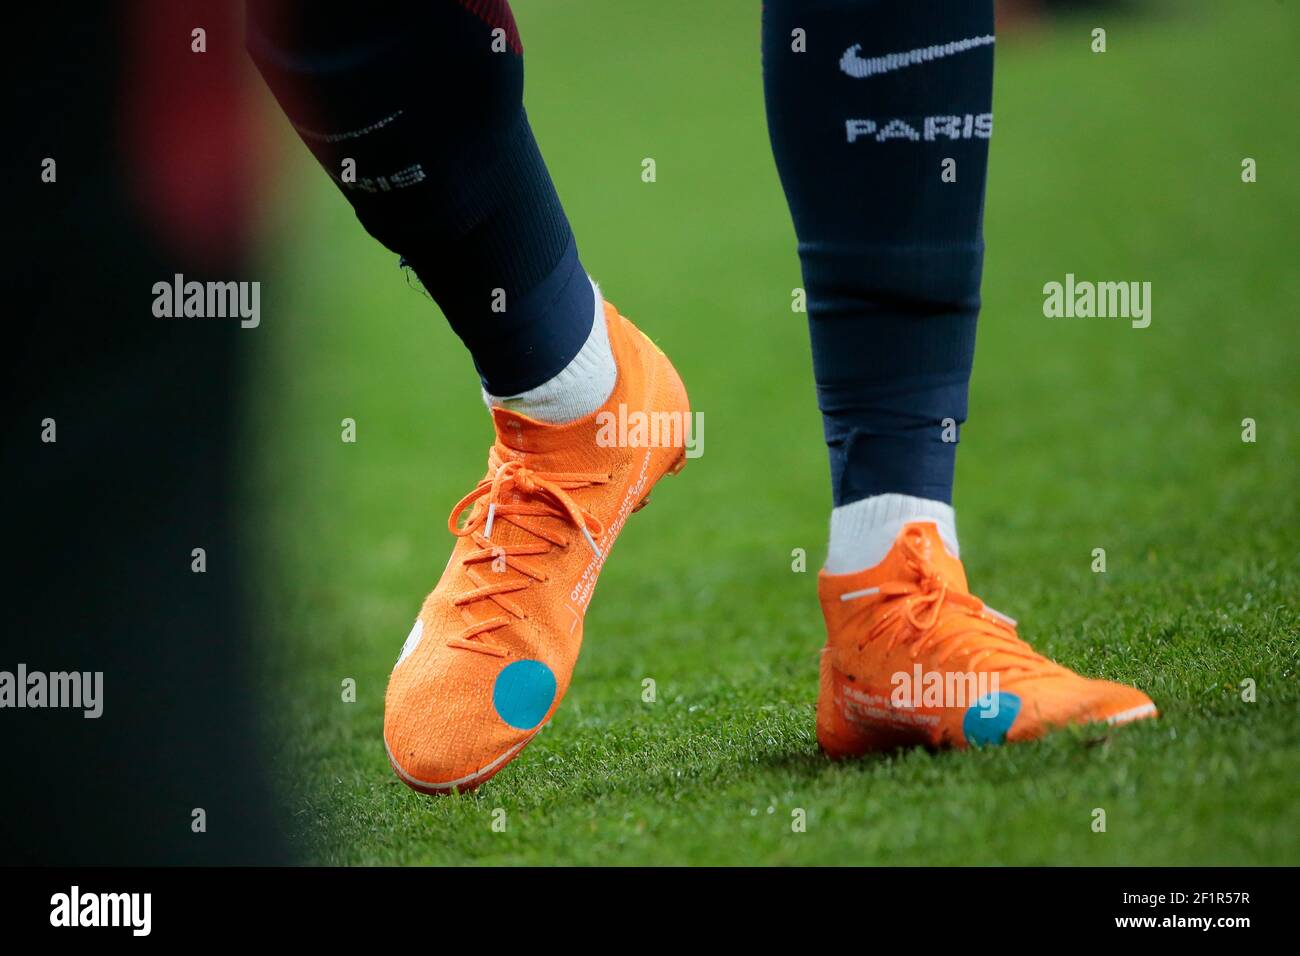 Zapatos de Kylian Mbappe (PSG), Off-White ™ para NIKE 'Nike Mercurial  Vapore' Beaverton, Oregon USA c. 2018 'KNIT', durante el campeonato francés  L1 partido de fútbol entre París Saint-Germain (PSG) y Mónaco,